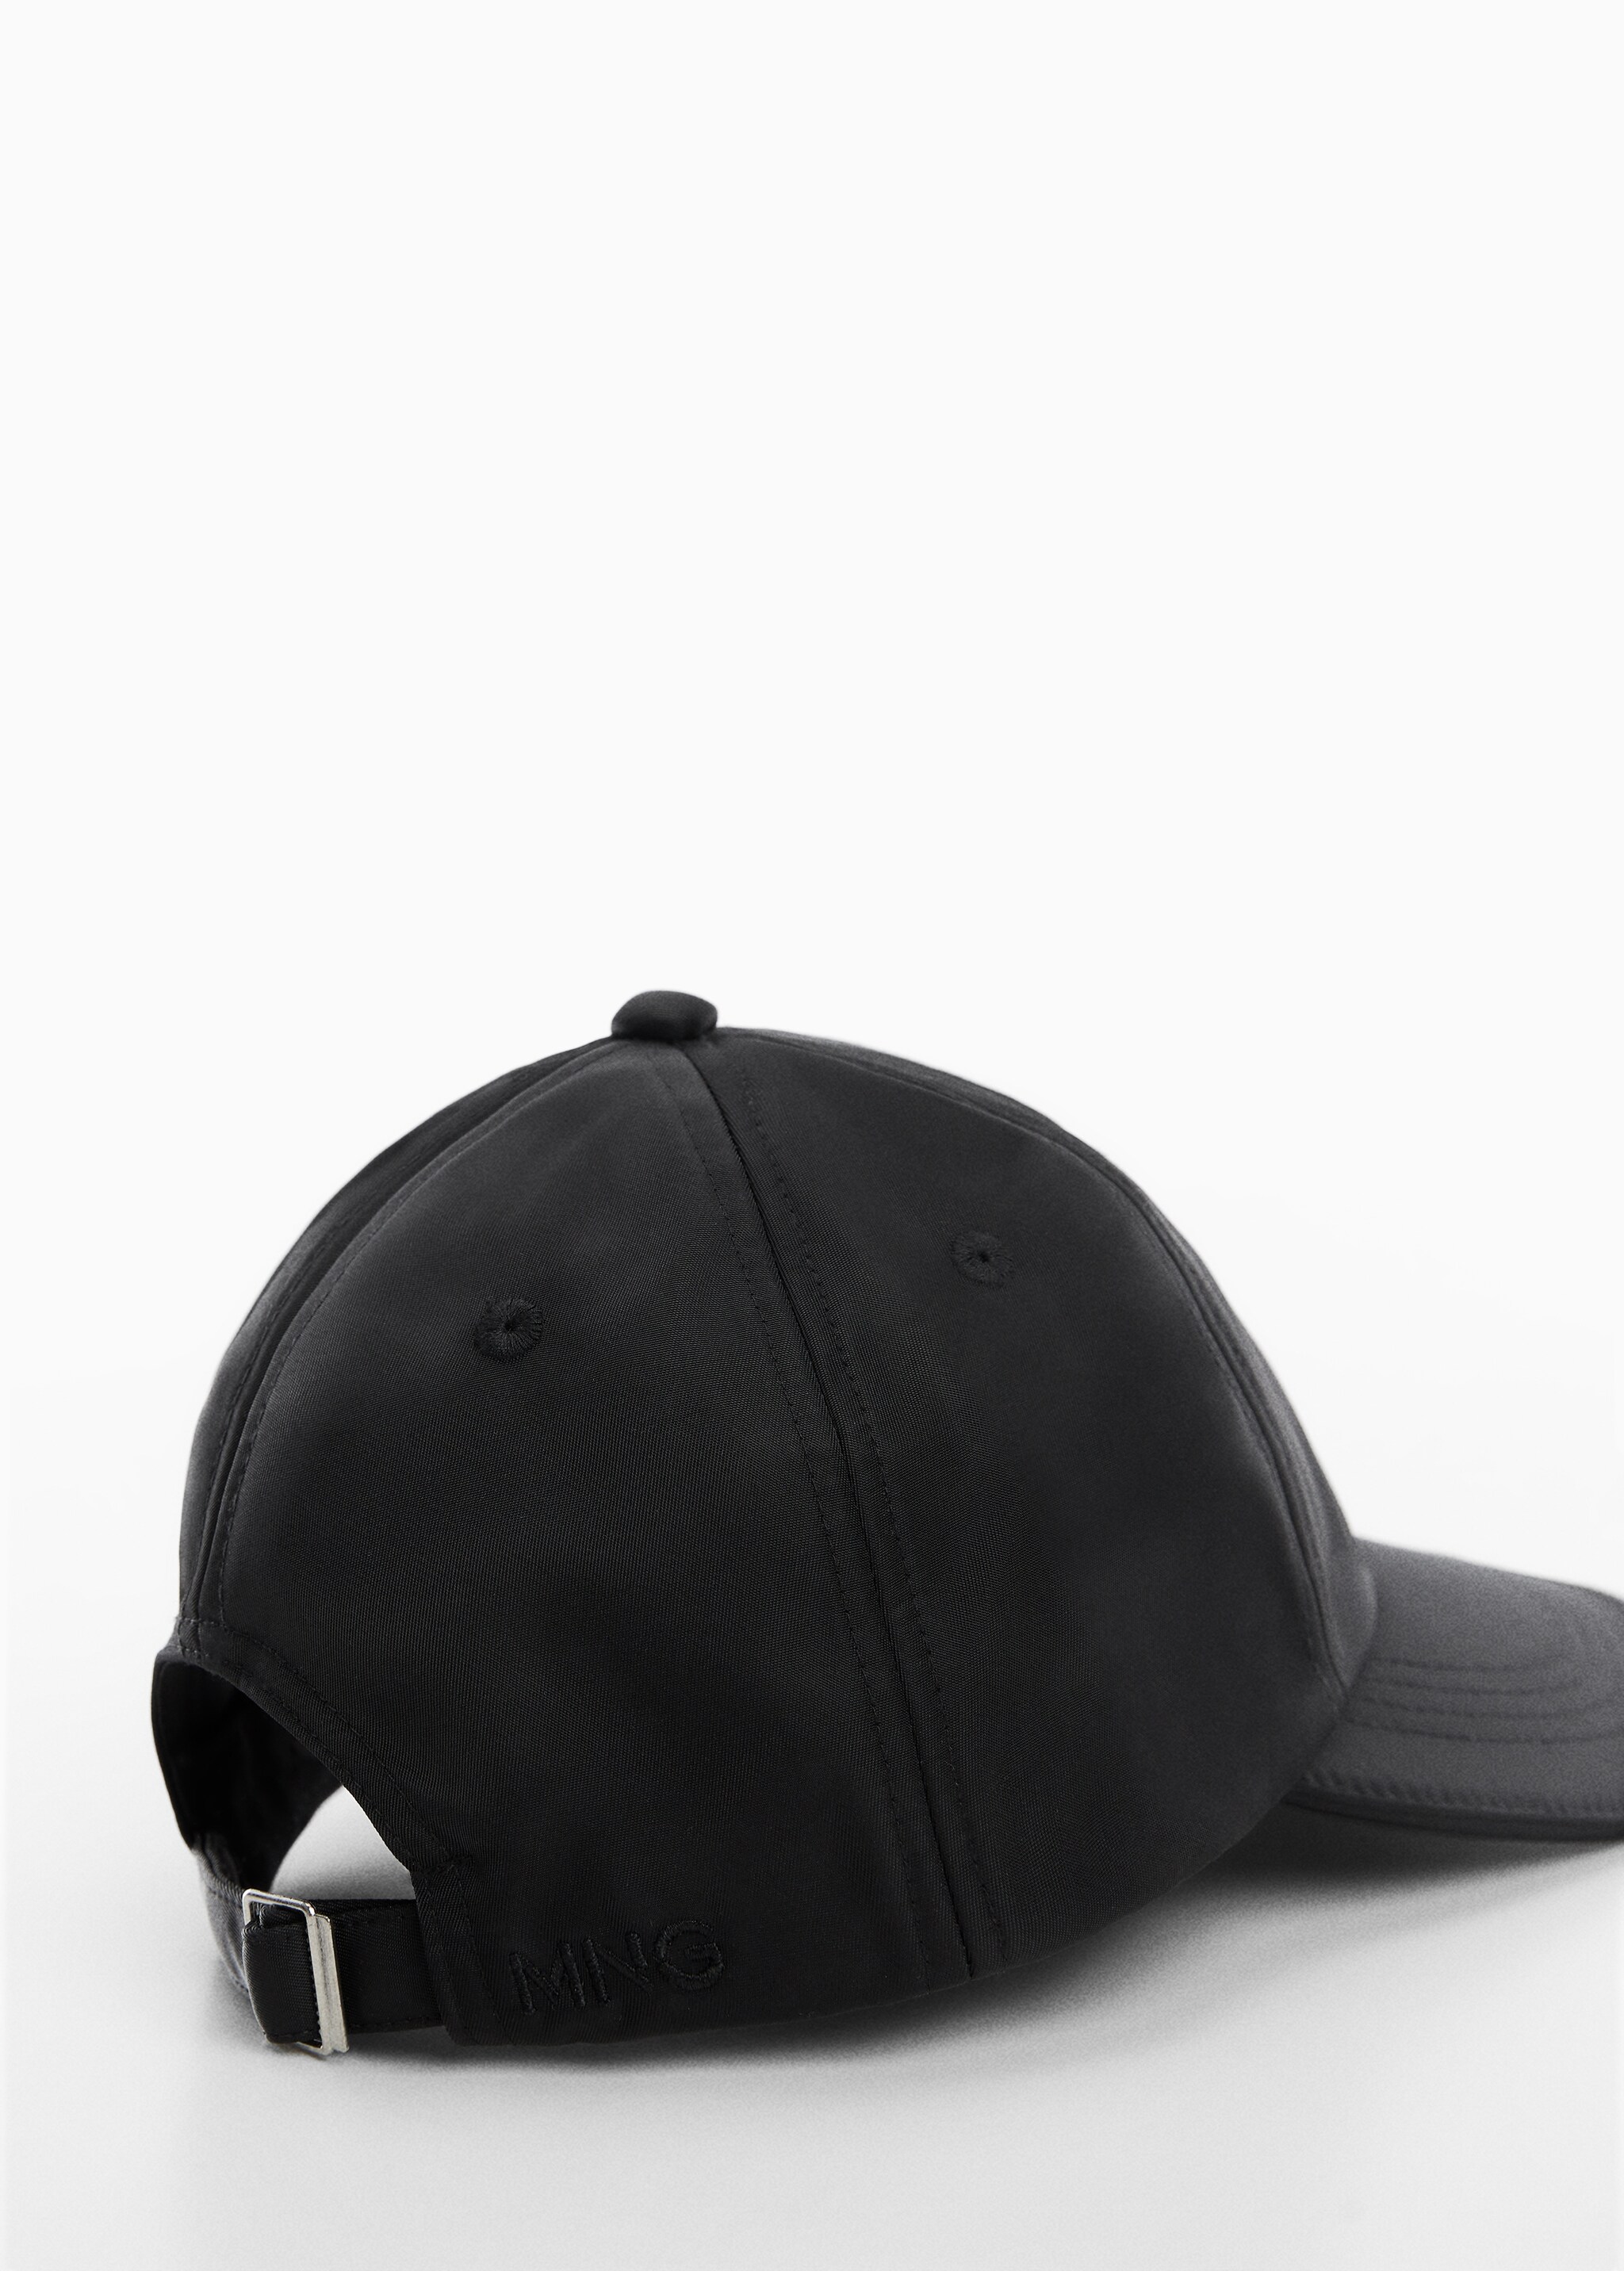 Soft visor cap - Details of the article 1